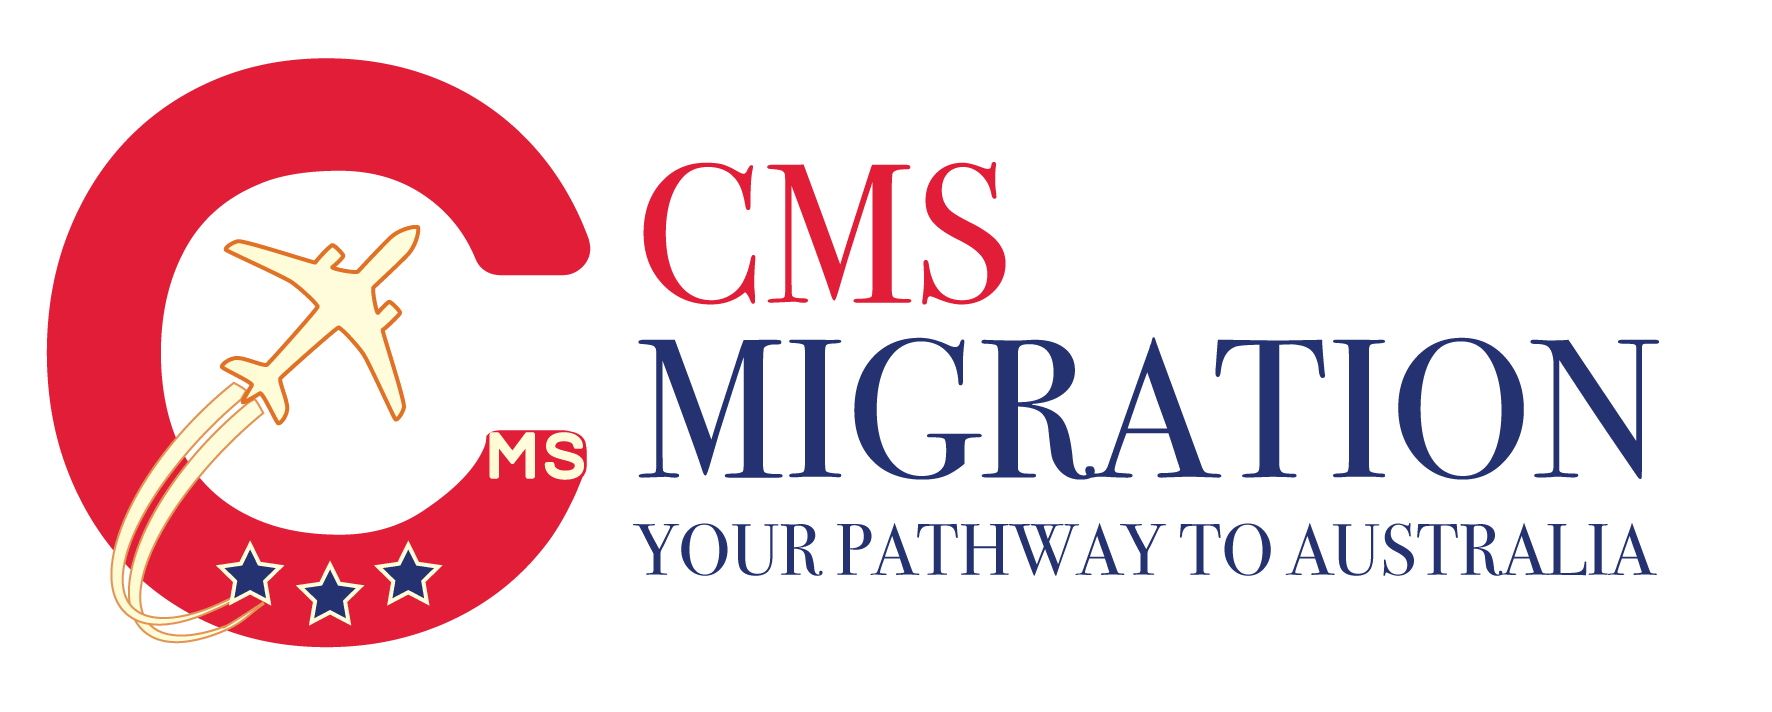 CMS Migration 476 Visa Agency